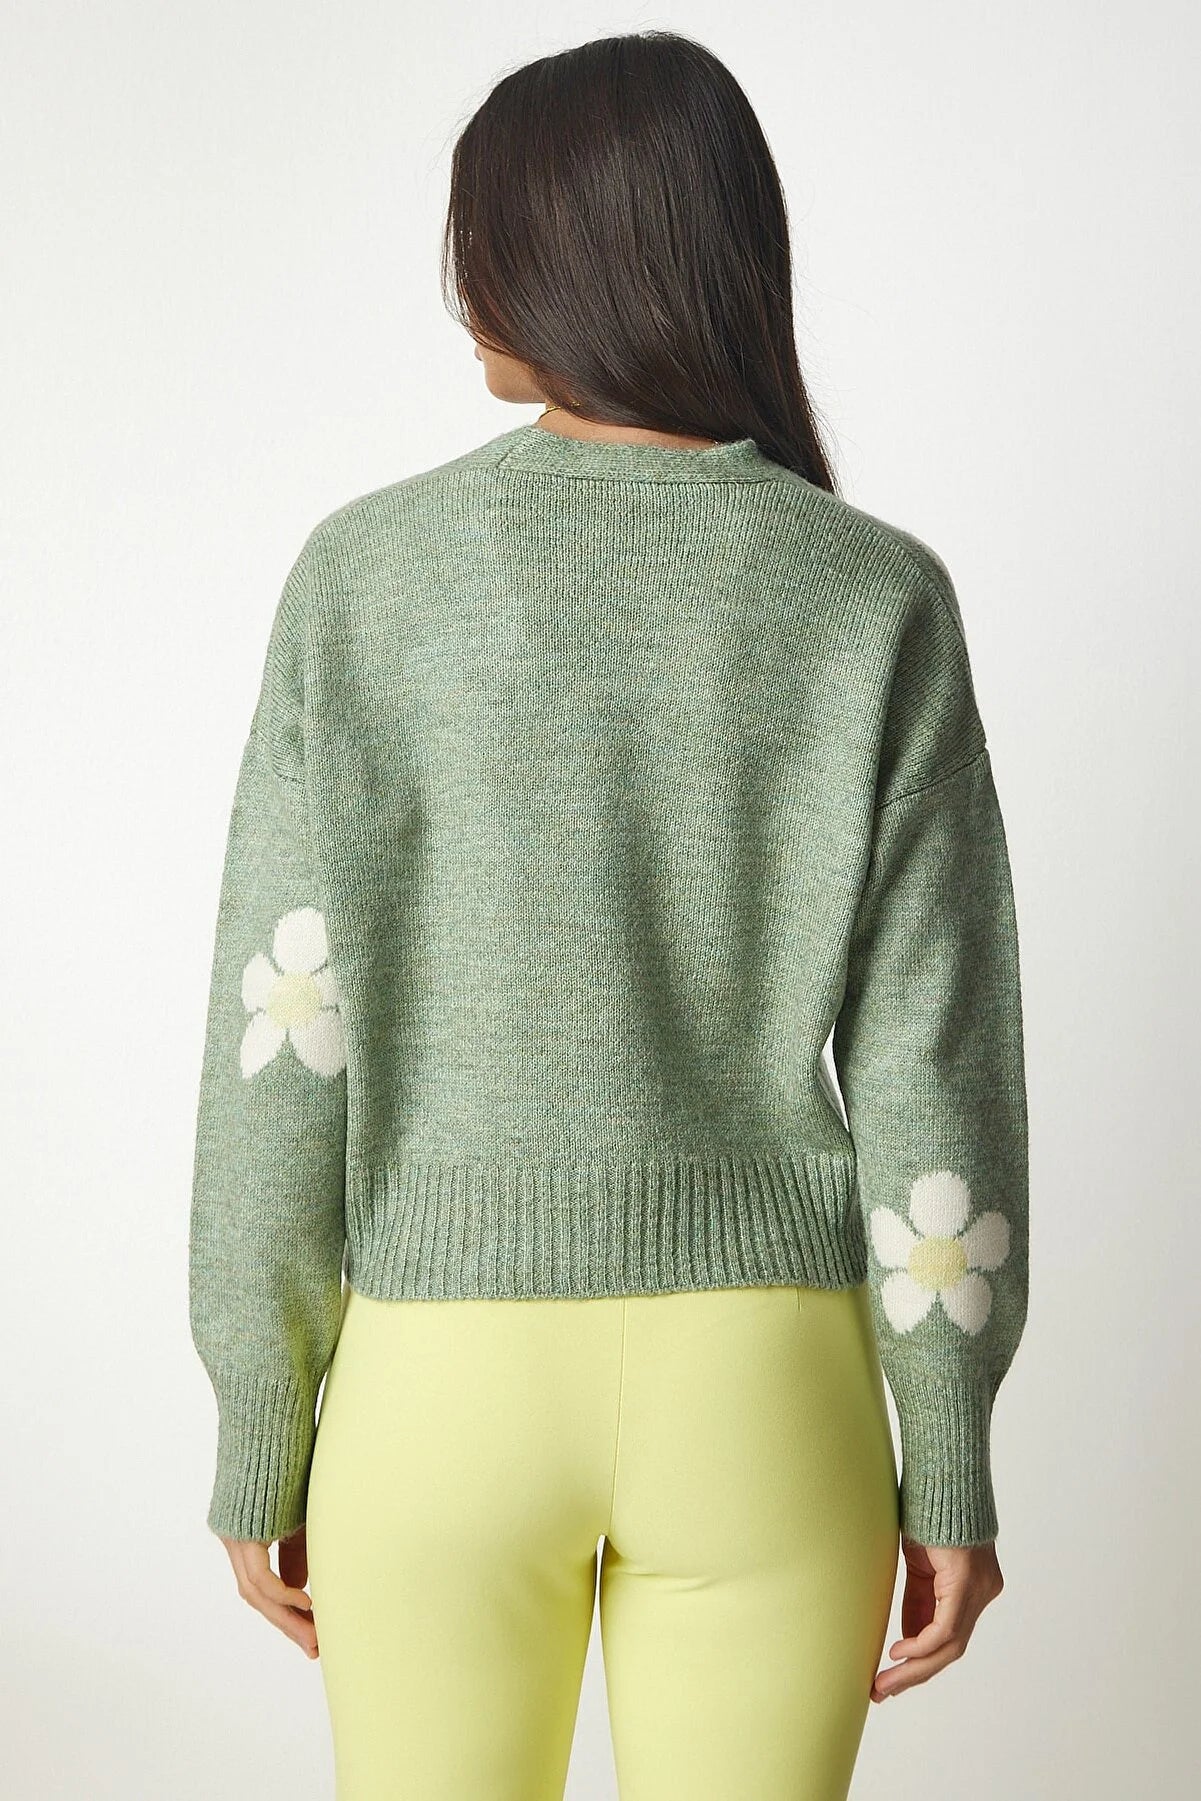 Mint Green Floral Cardigan